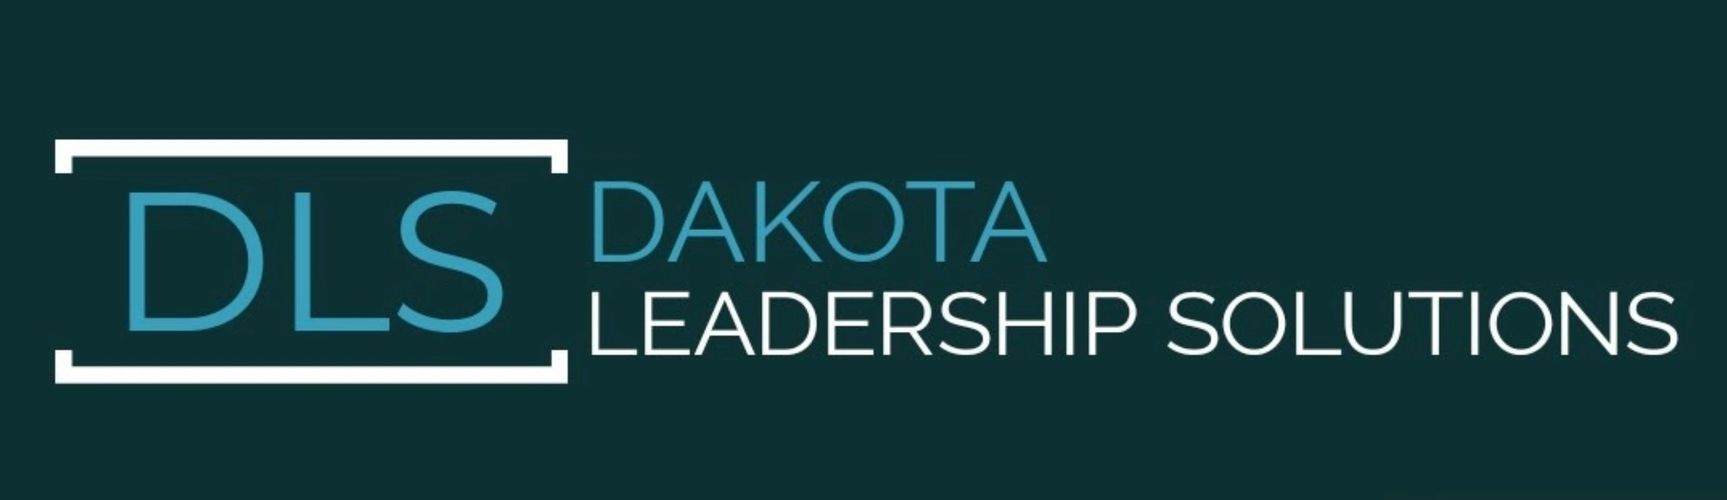 DLS Dakota Leadership Solutions Logo